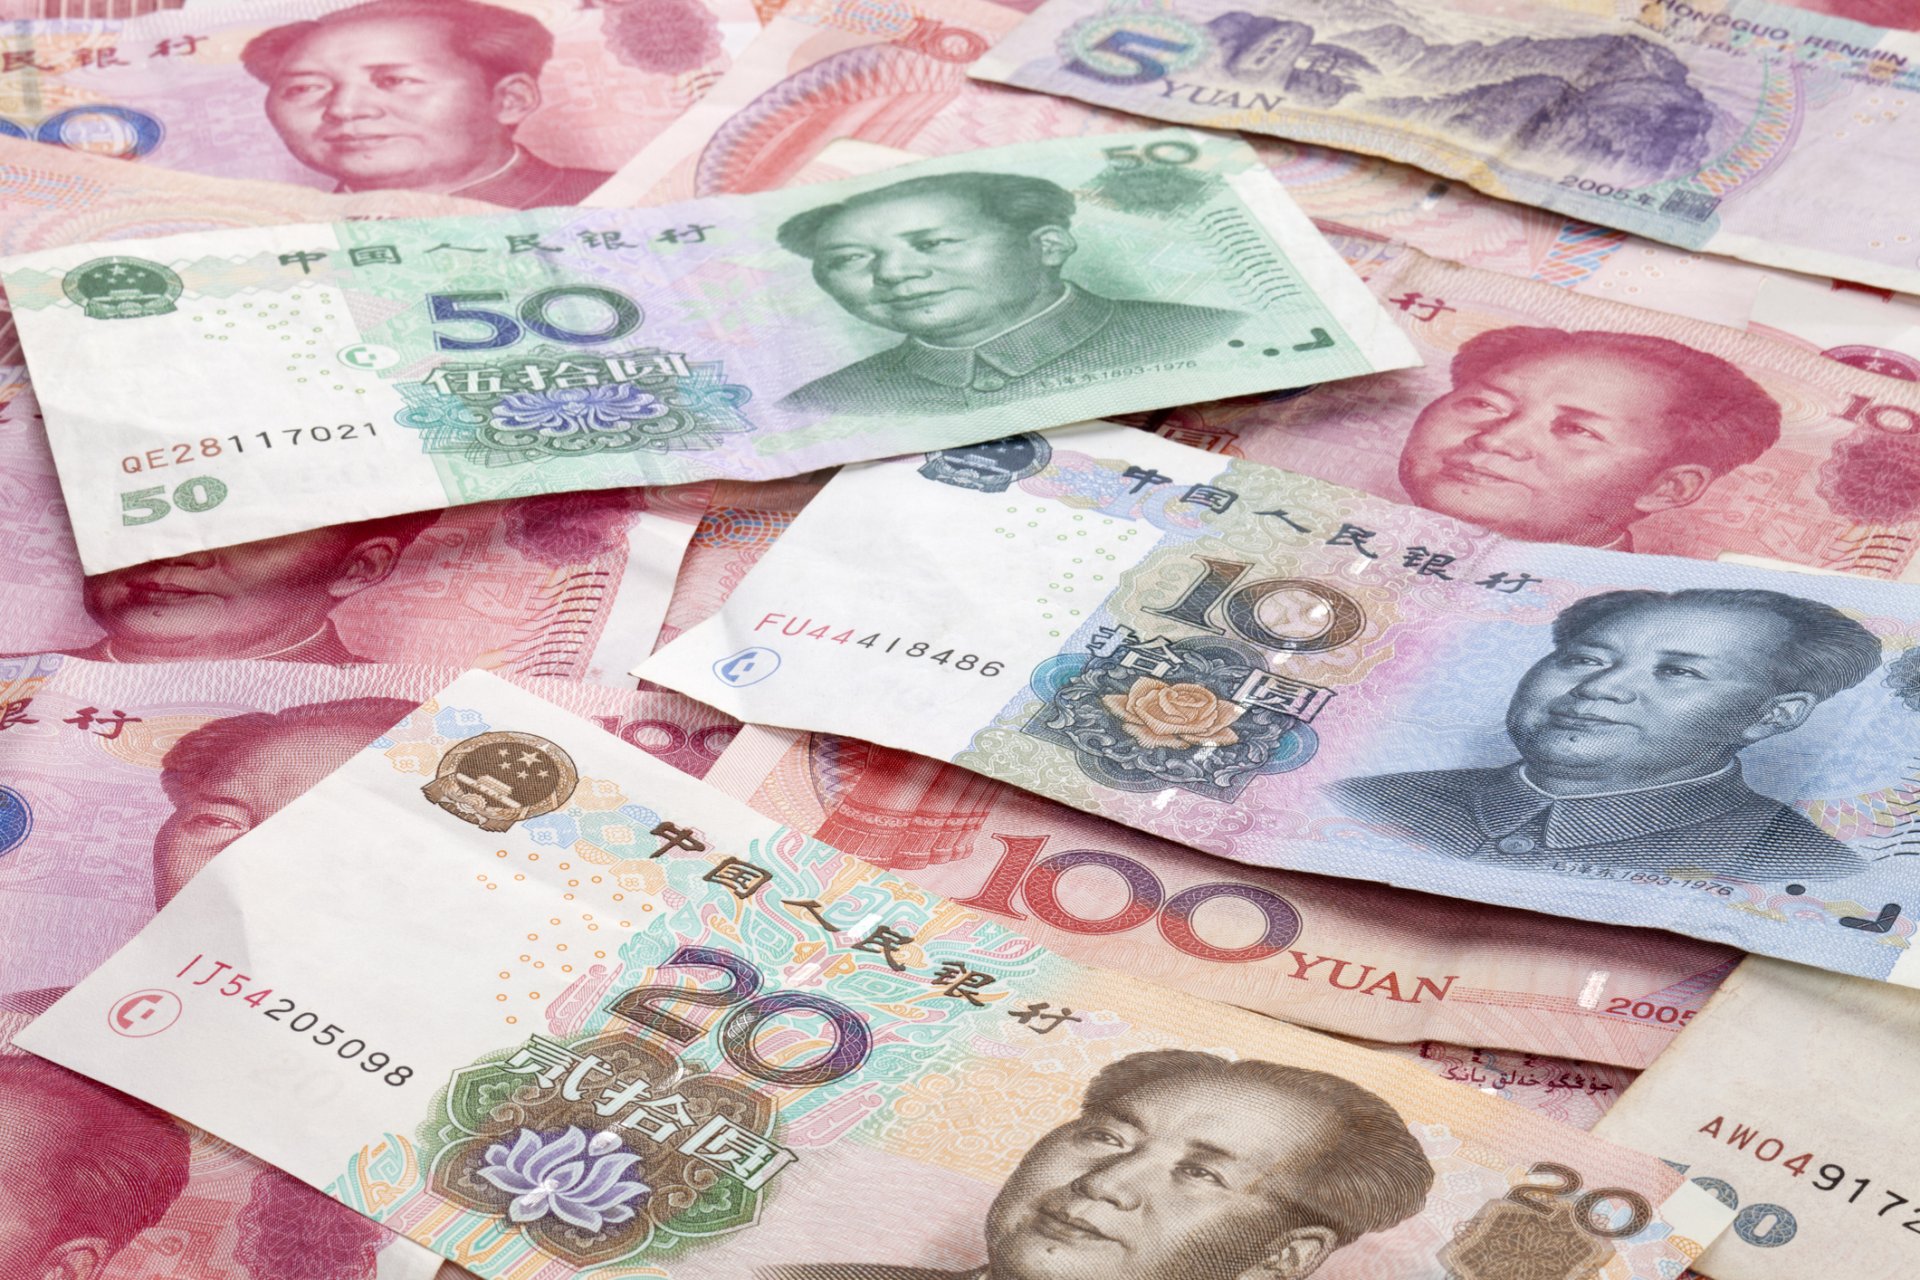 Июань. Валюта Китая юань. Деньги Китая юань. Китайский юань жэньминьби. Юань (валюта).